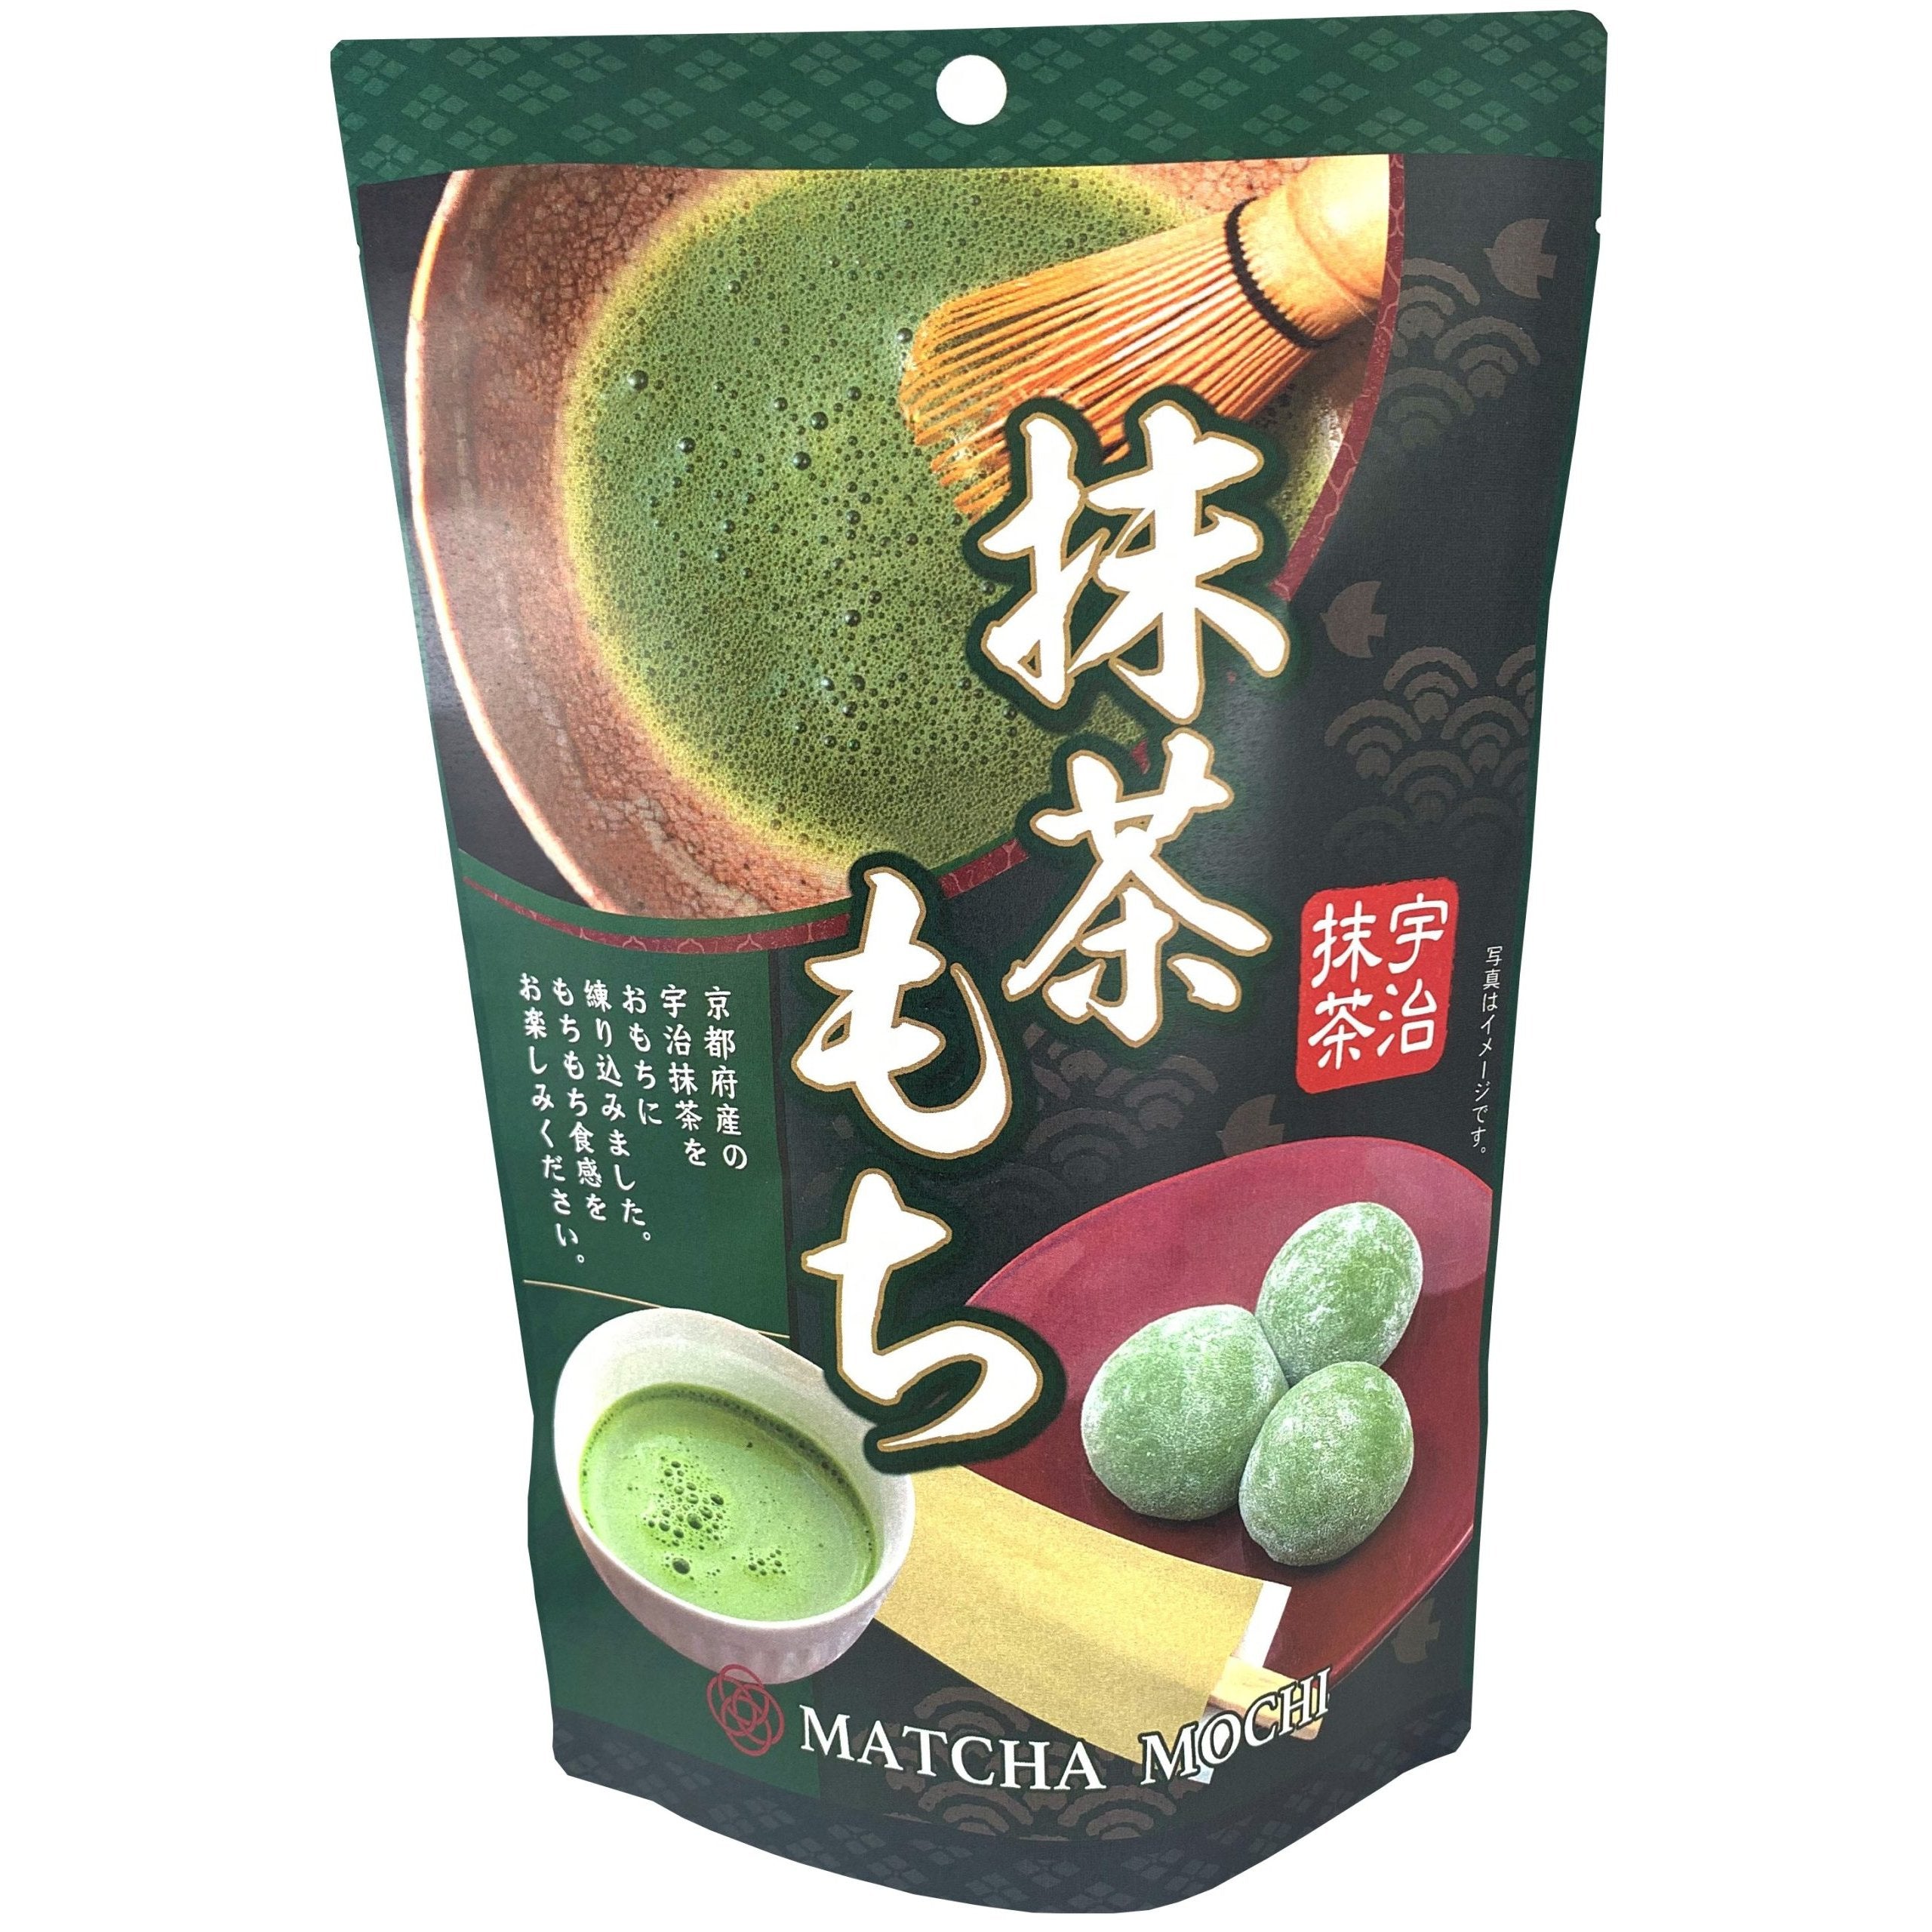 Seiki Bite Sized Matcha Green Tea Mochi (Pack of 5)